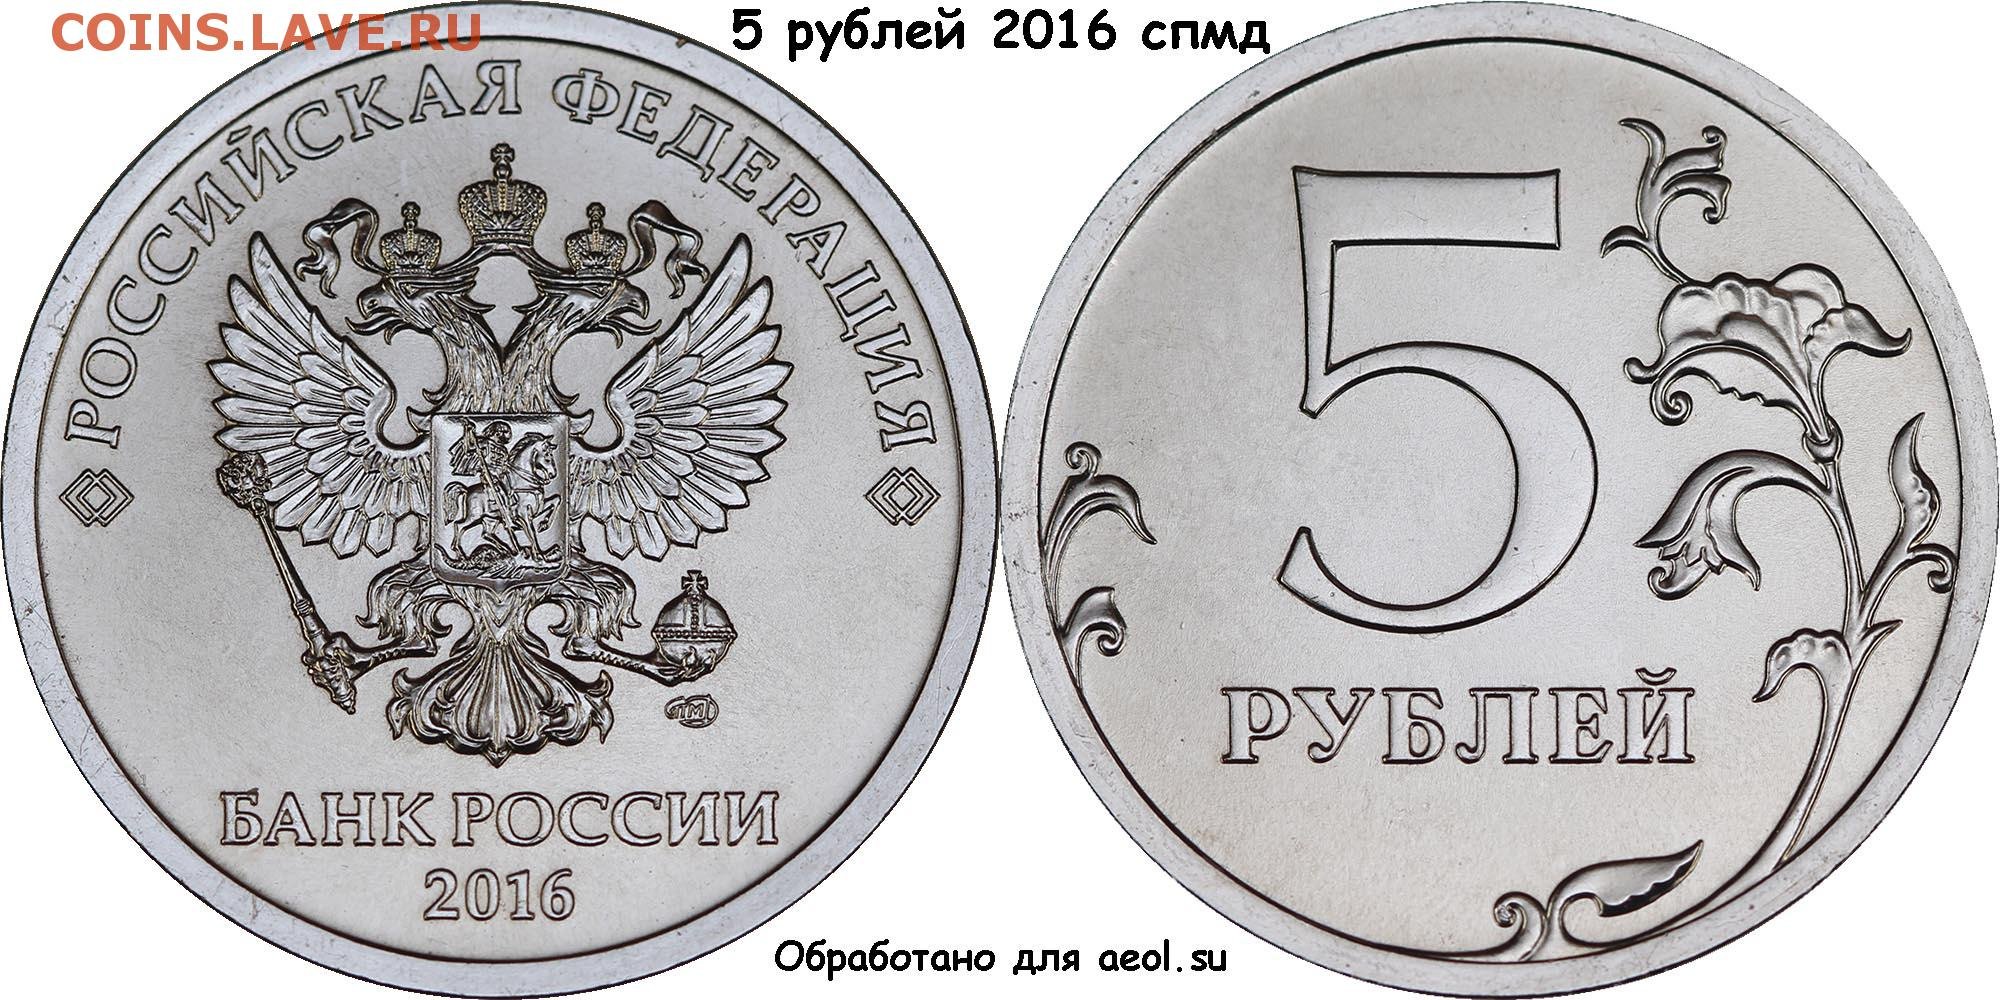 5 рублей характеристики. 5 Рублей 2016 года СПМД. Монета 1 рубль 2016 года СПМД. 5 Рублевые монеты СПМД. 5 Рублей 2016 СПМД.